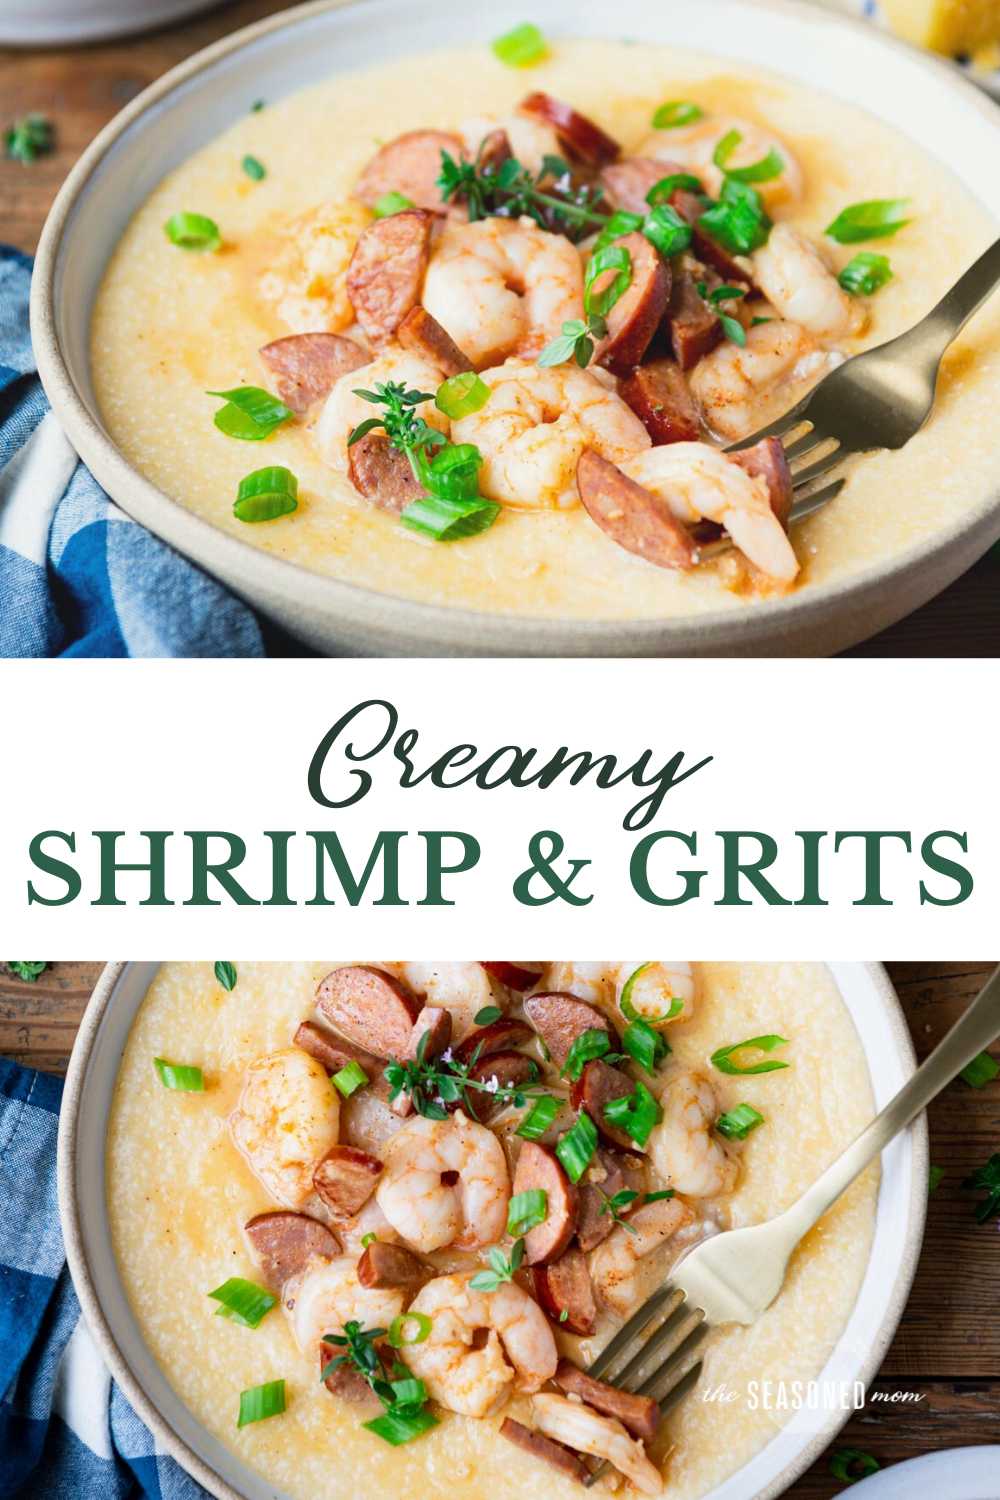 Creamy Shrimp and Grits - The Seasoned Mom